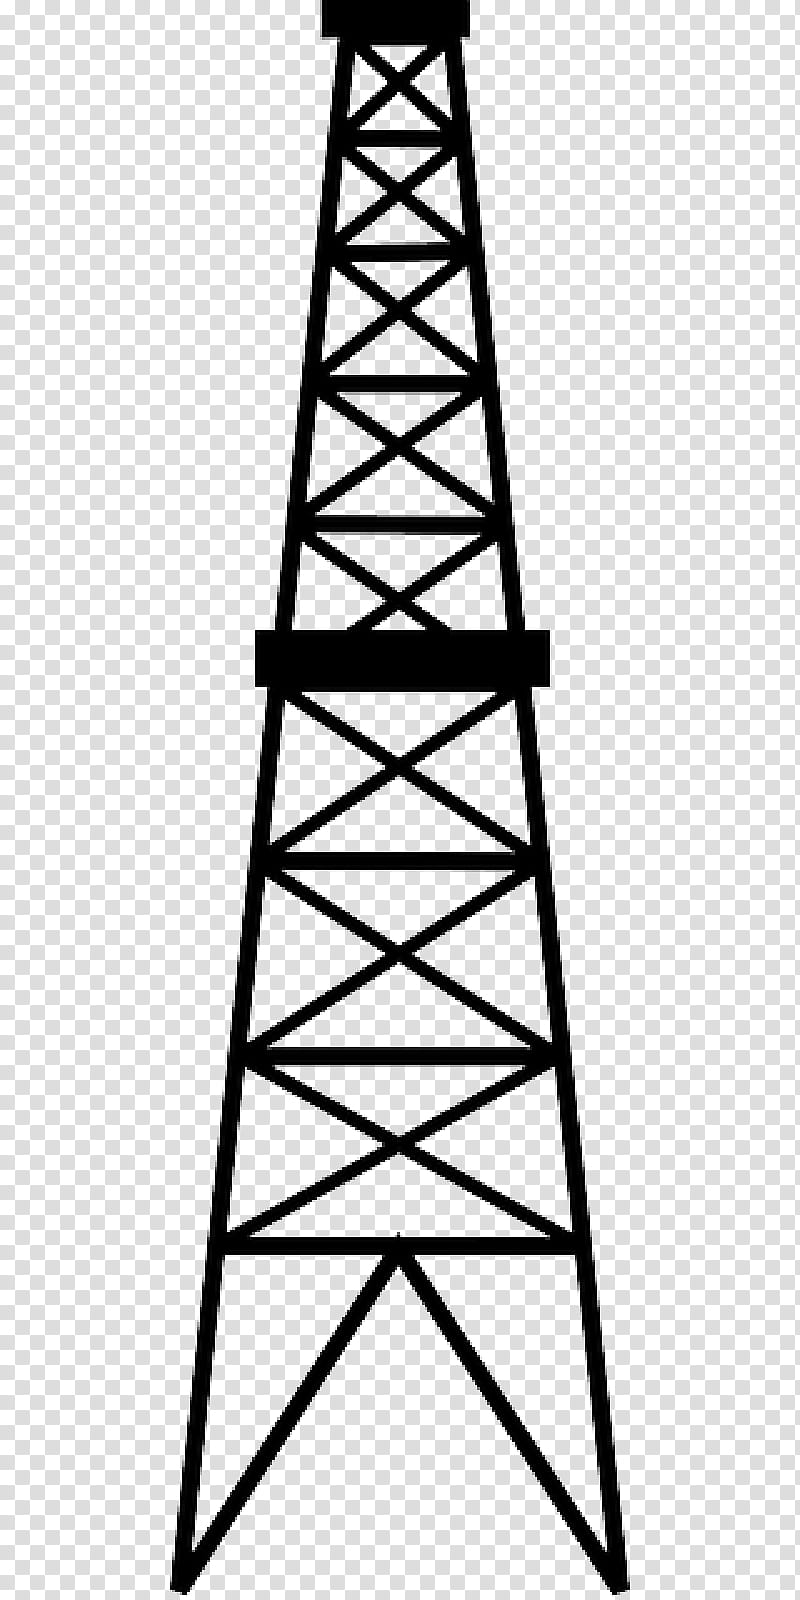 Oil, Derrick, Drilling Rig, Oil Platform, Petroleum, Oil Well, Industry, Tower transparent background PNG clipart